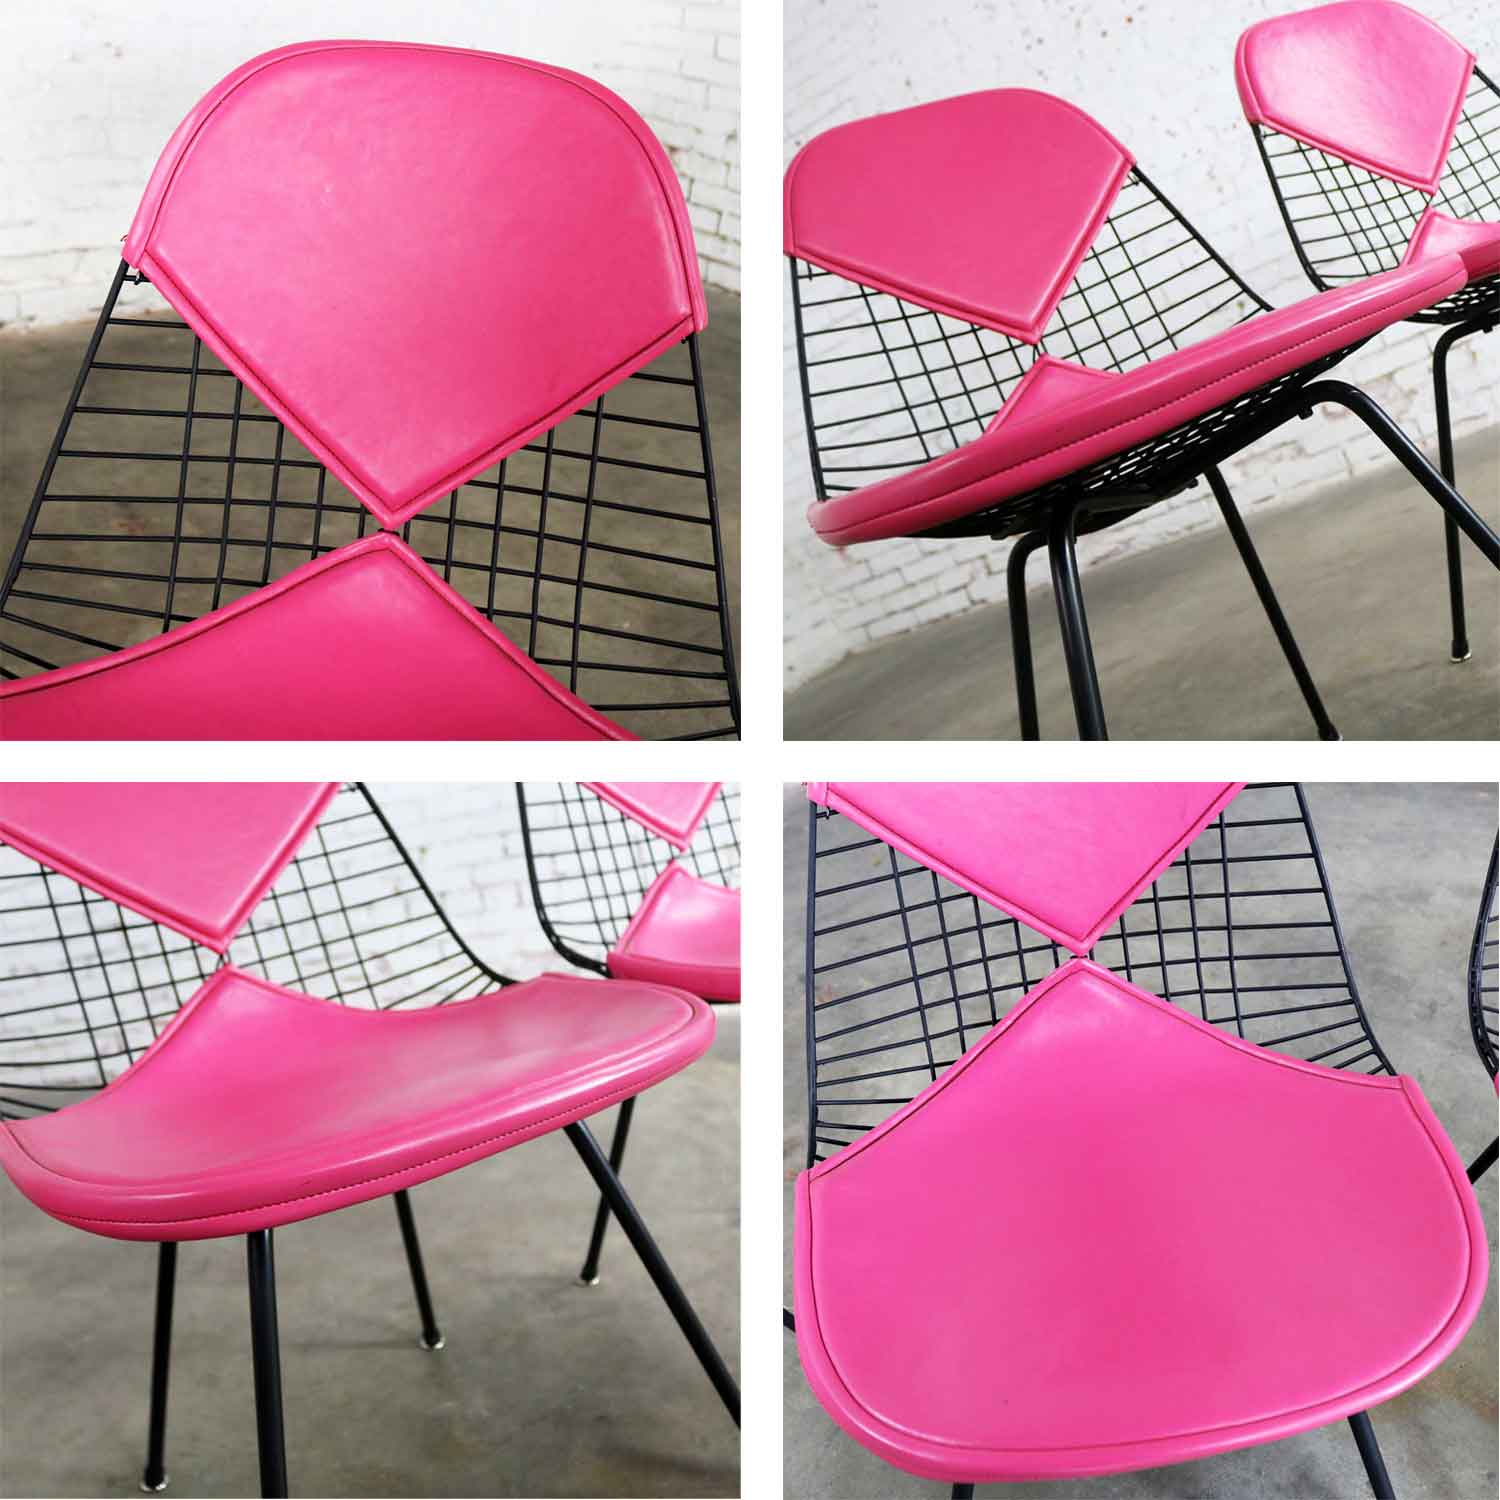 4 DKX-2 Wire Bikini Shell Chairs w/ X Bases & Hot Pink Bikinis by Eames for Herman Miller